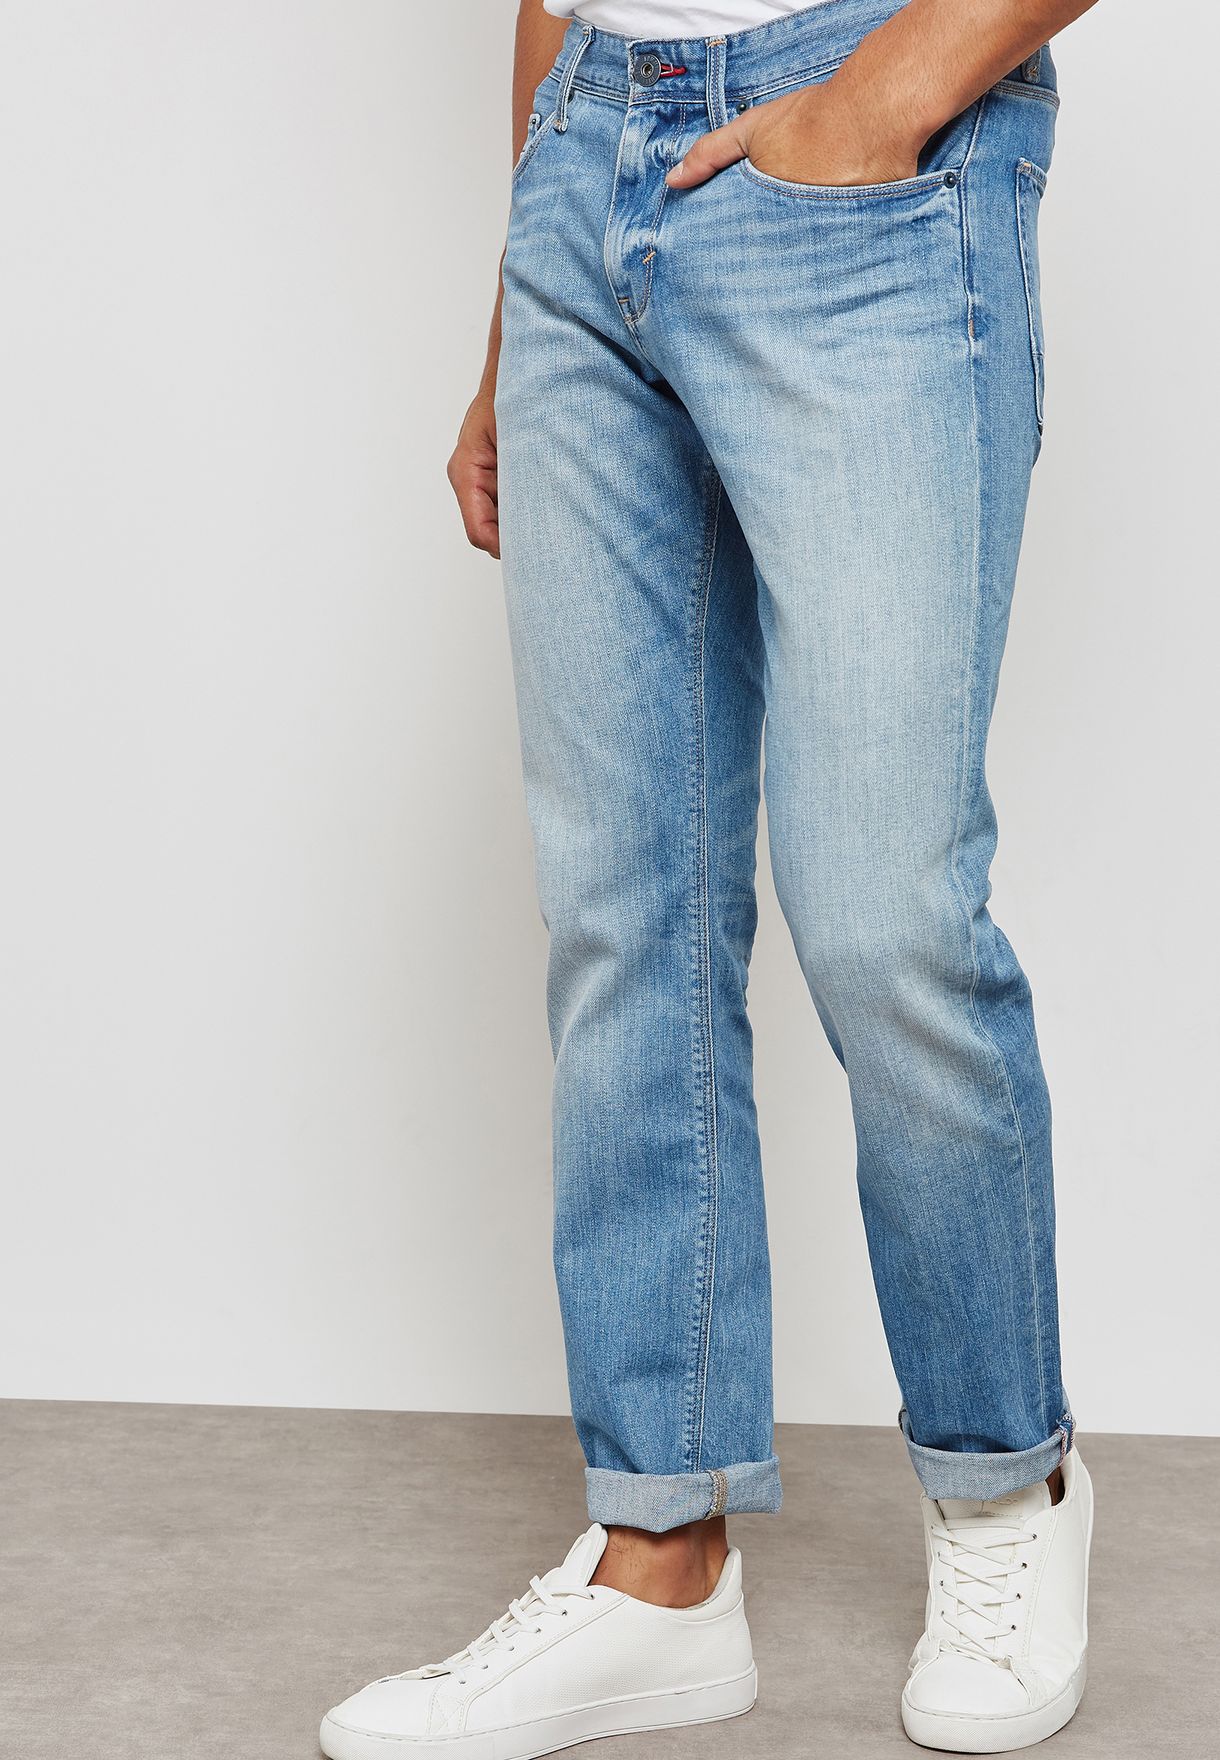 Tommy Hilfiger Jeans - DENTON - P ZION IN light blue